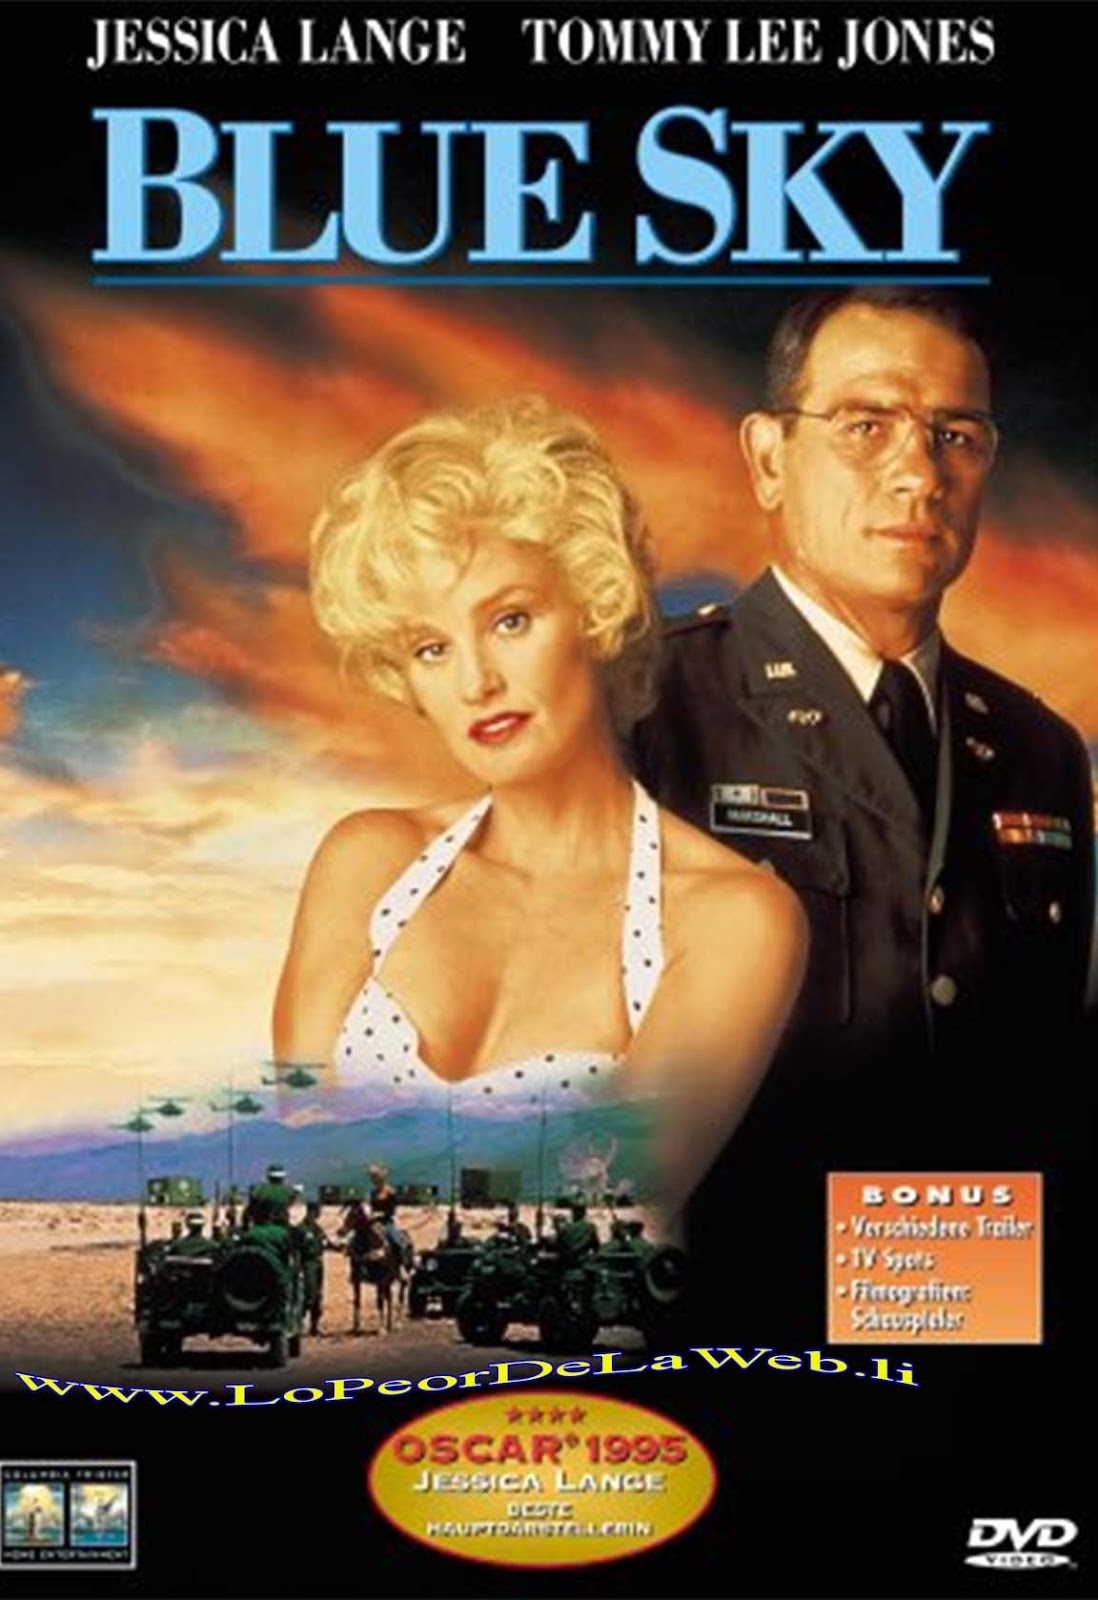 Blue Sky (1994 - Jessica Lange Tommy Lee Jones)